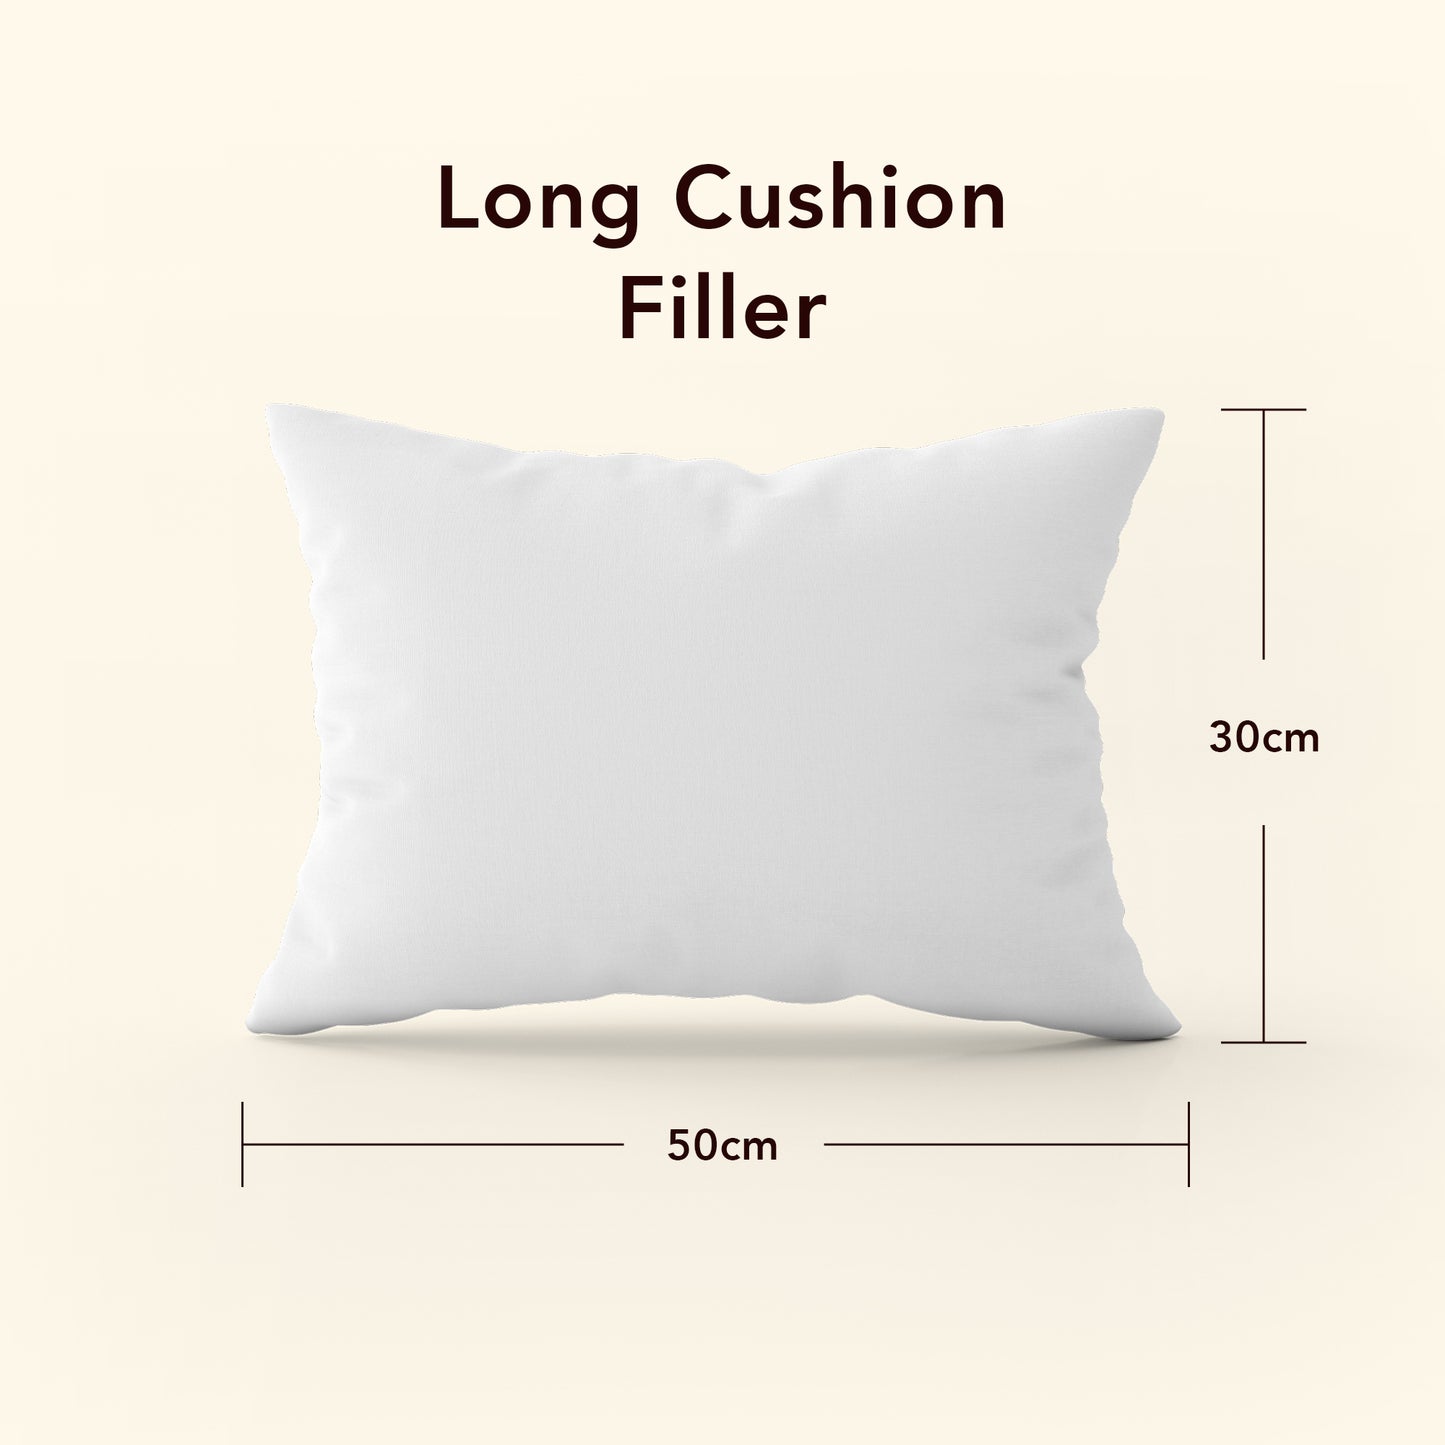 Long Cushion Filler